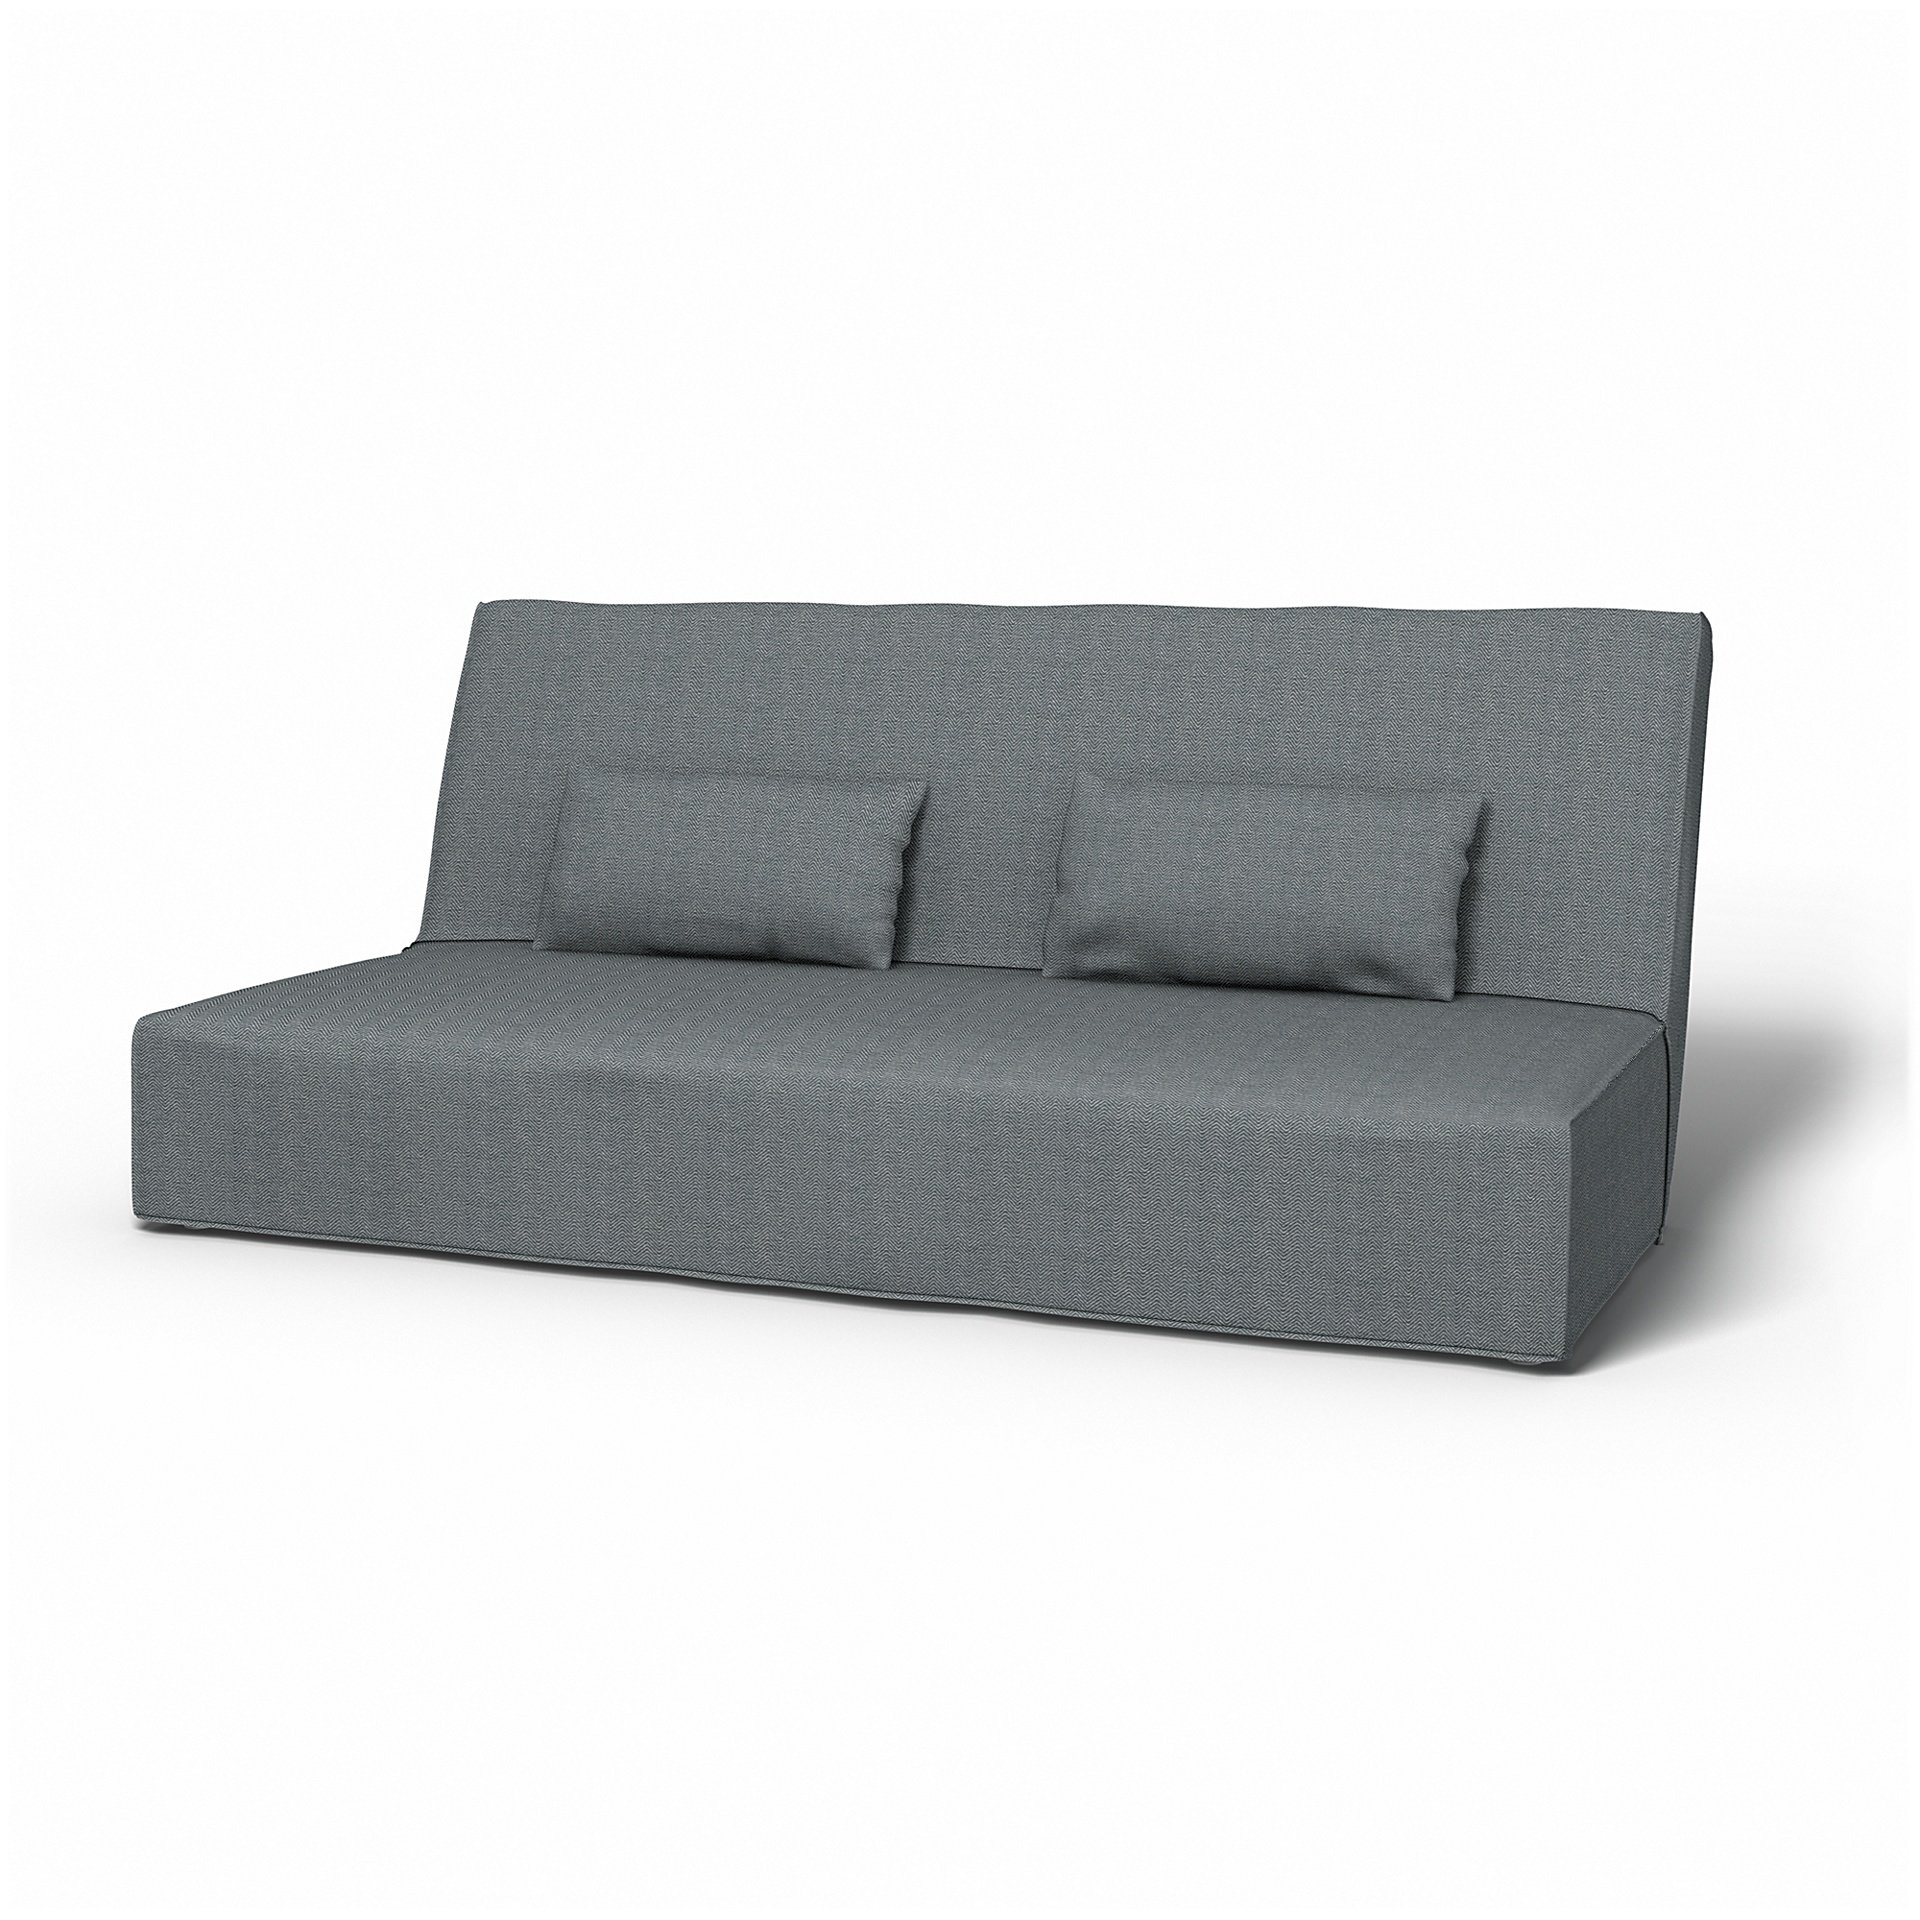 Mellow Rang Kind IKEA Beddinge, 3 Seater sofa bed cover long skirt - Bemz | Bemz